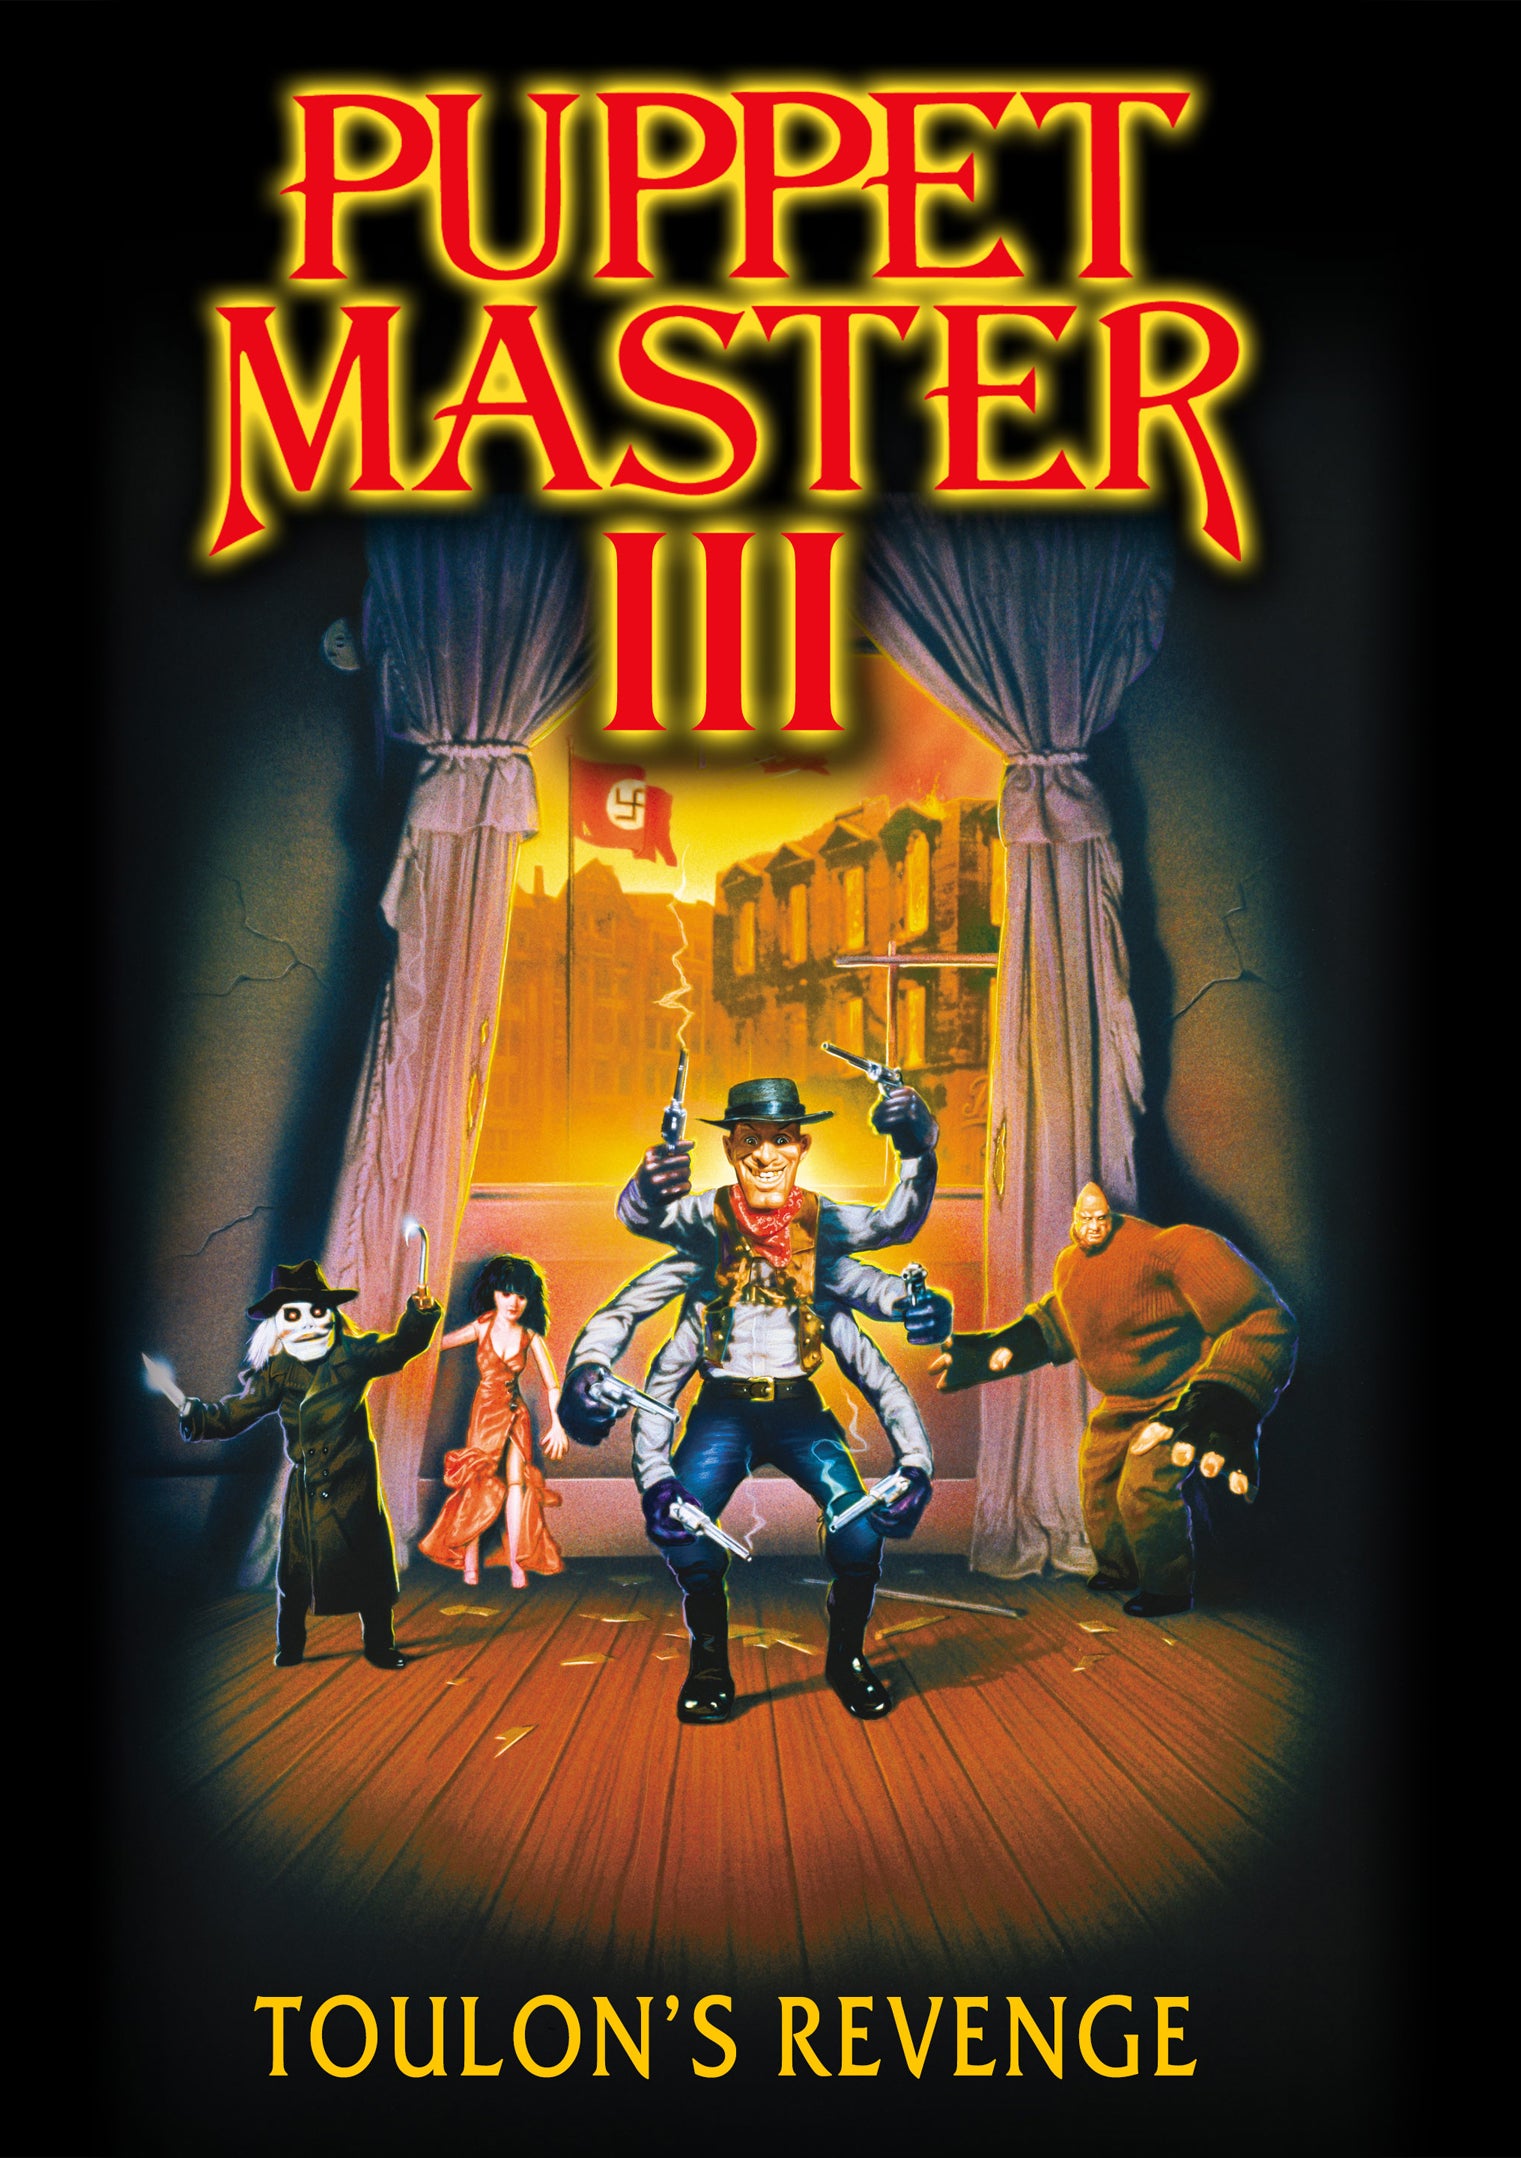 PUPPET MASTER III DVD